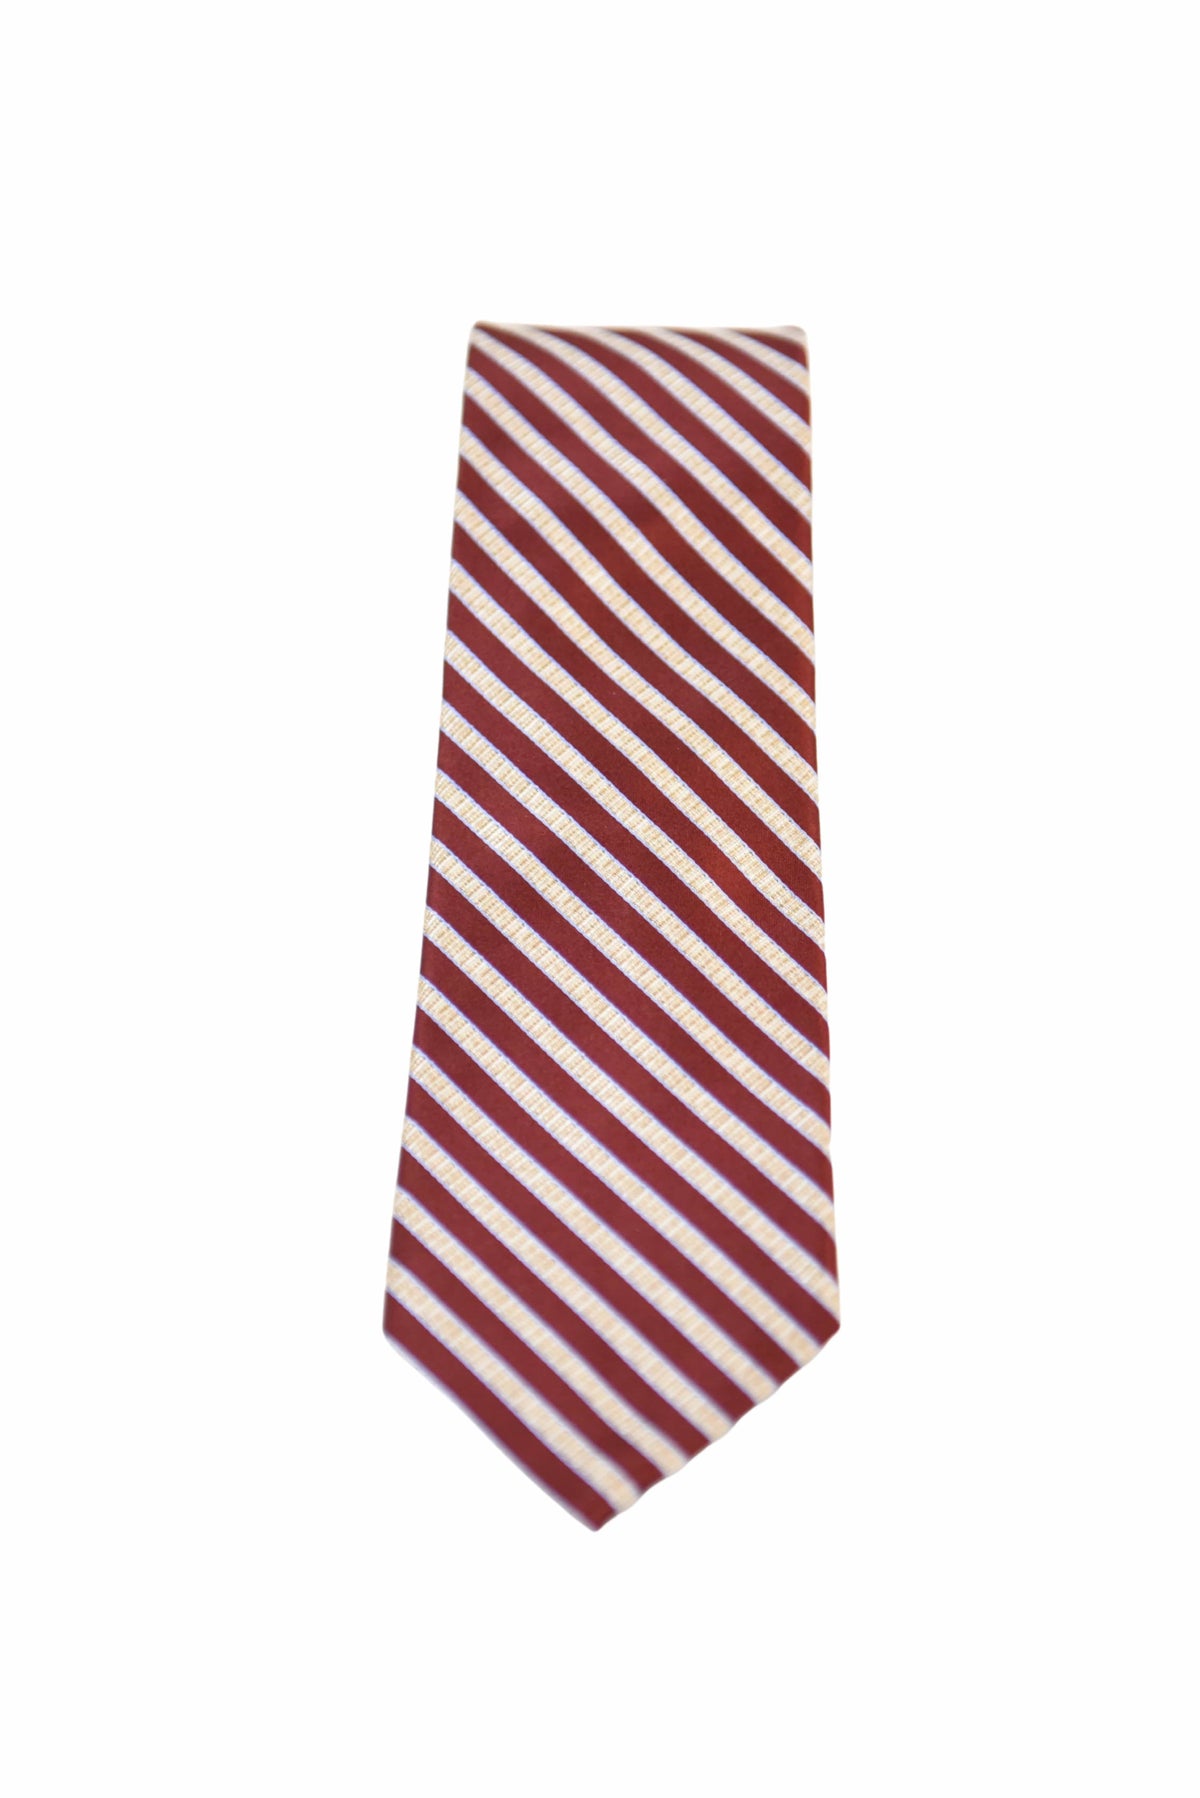 The Suit Depot Burgundy Stripes Arthur Black Premium Silk Tie